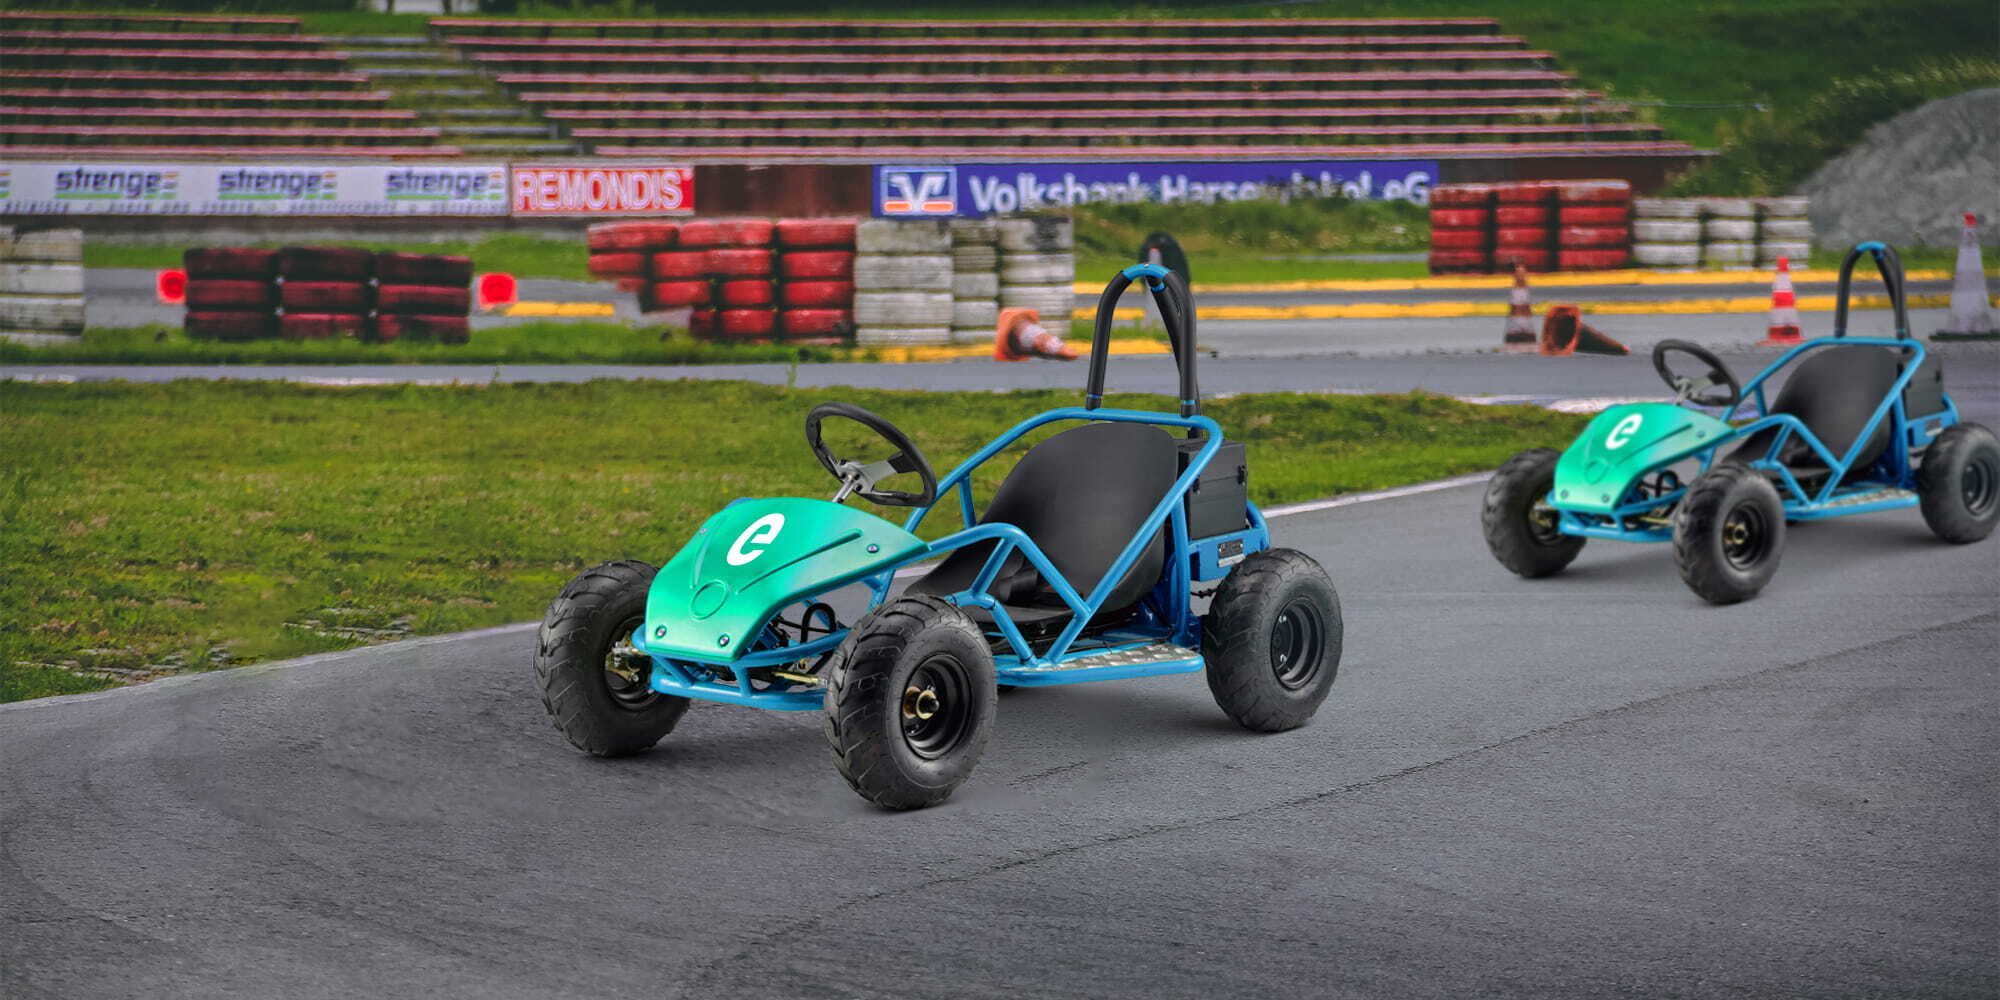 go kart pro High speed kids racing go karting adult electric racing go kart  for sale